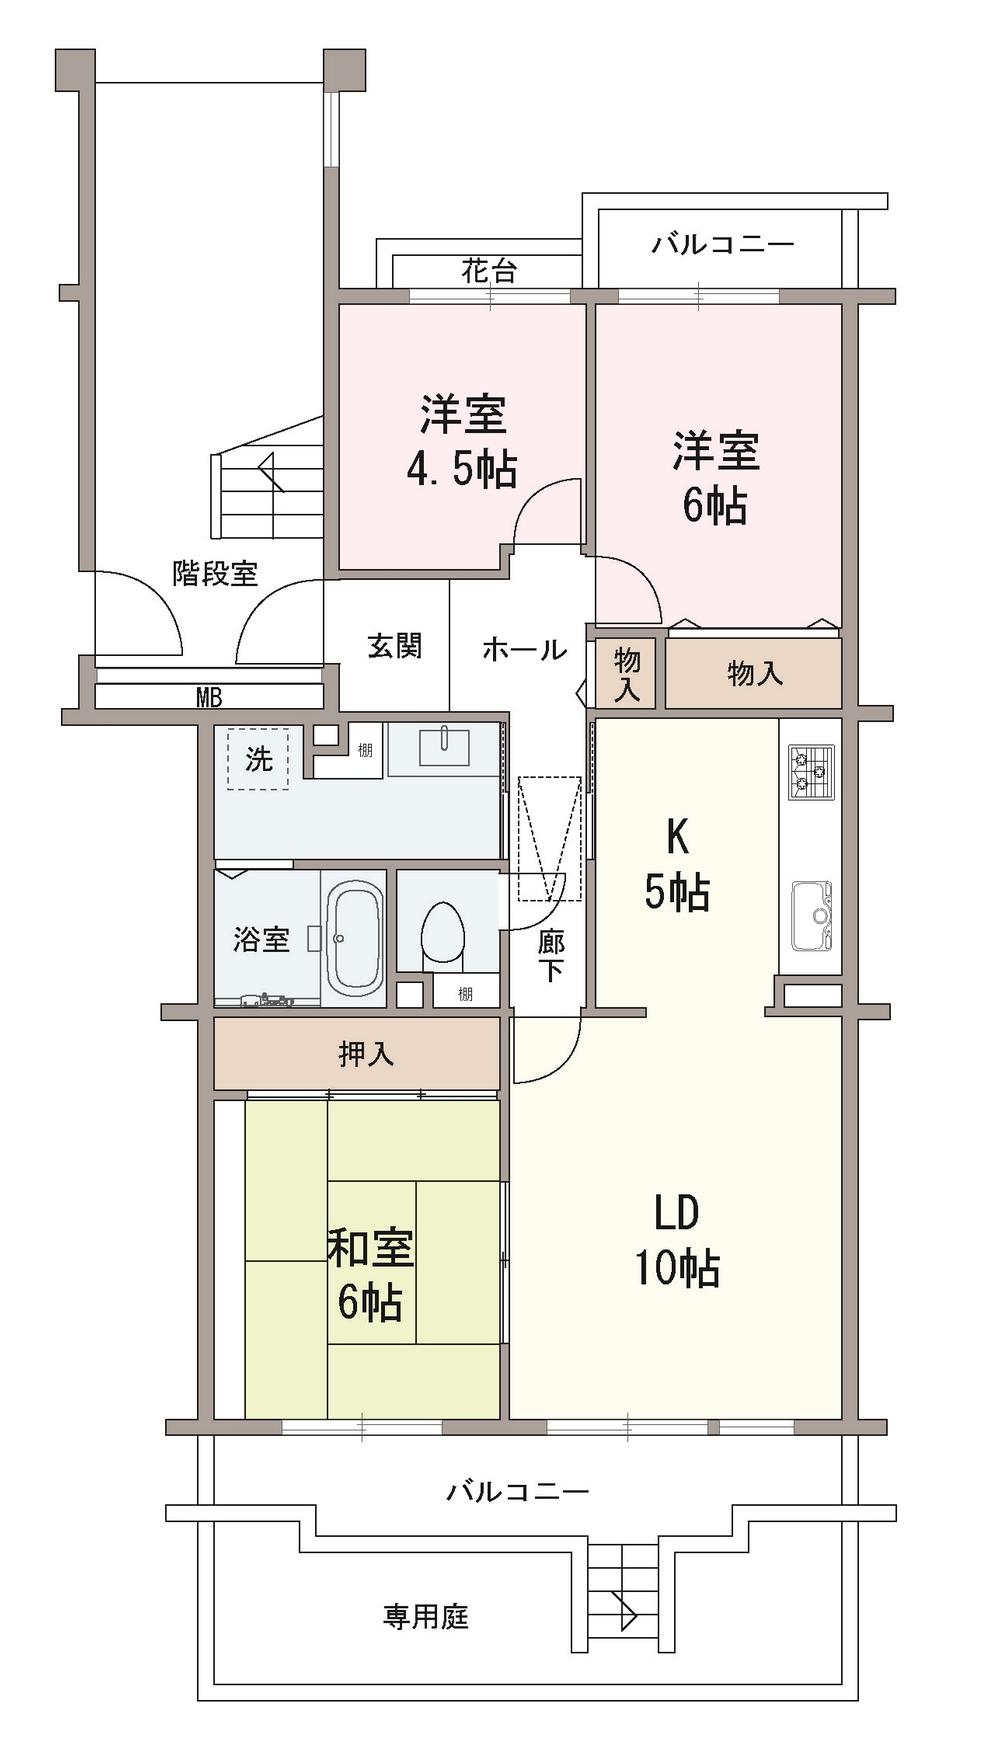 Floor plan. 3LDK, Price 12.8 million yen, Occupied area 81.92 sq m , Balcony area 11.75 sq m private garden 3LDK